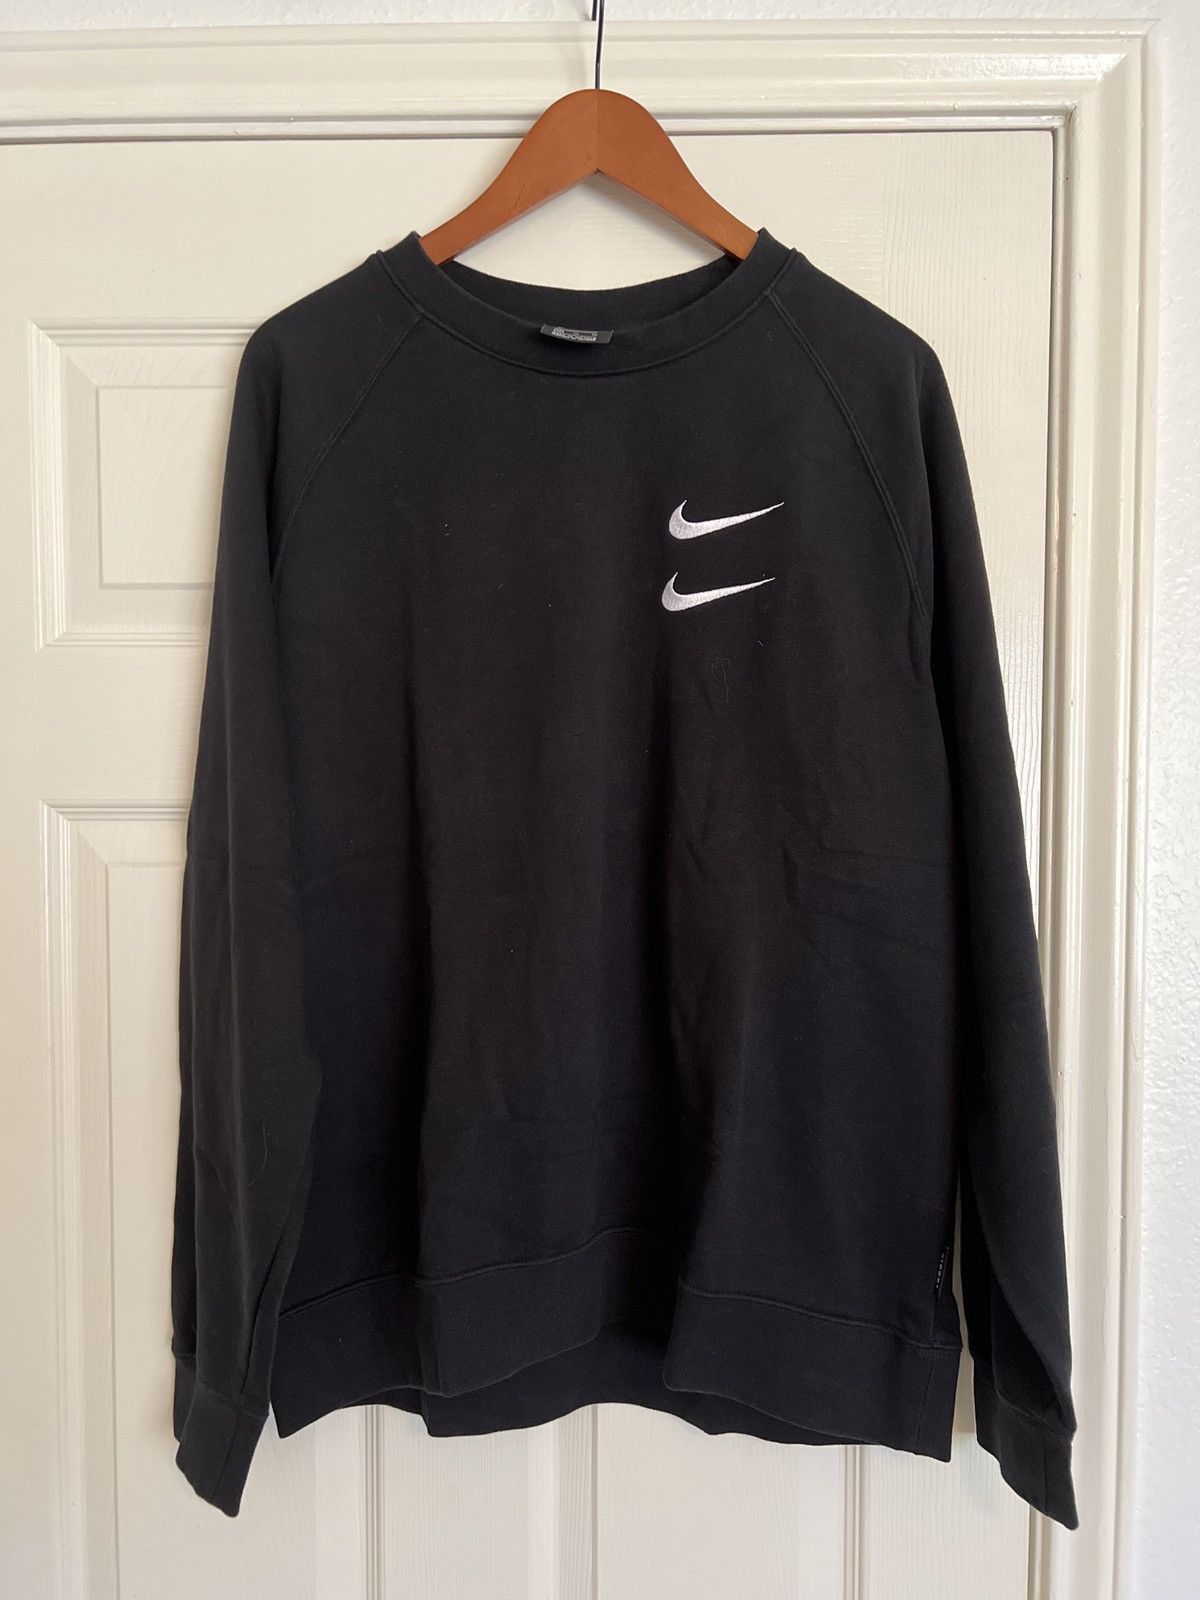 Nike Nike Double Swoosh Crewneck Sweatshirt Size US XL / EU 56 / 4 - 1 Preview